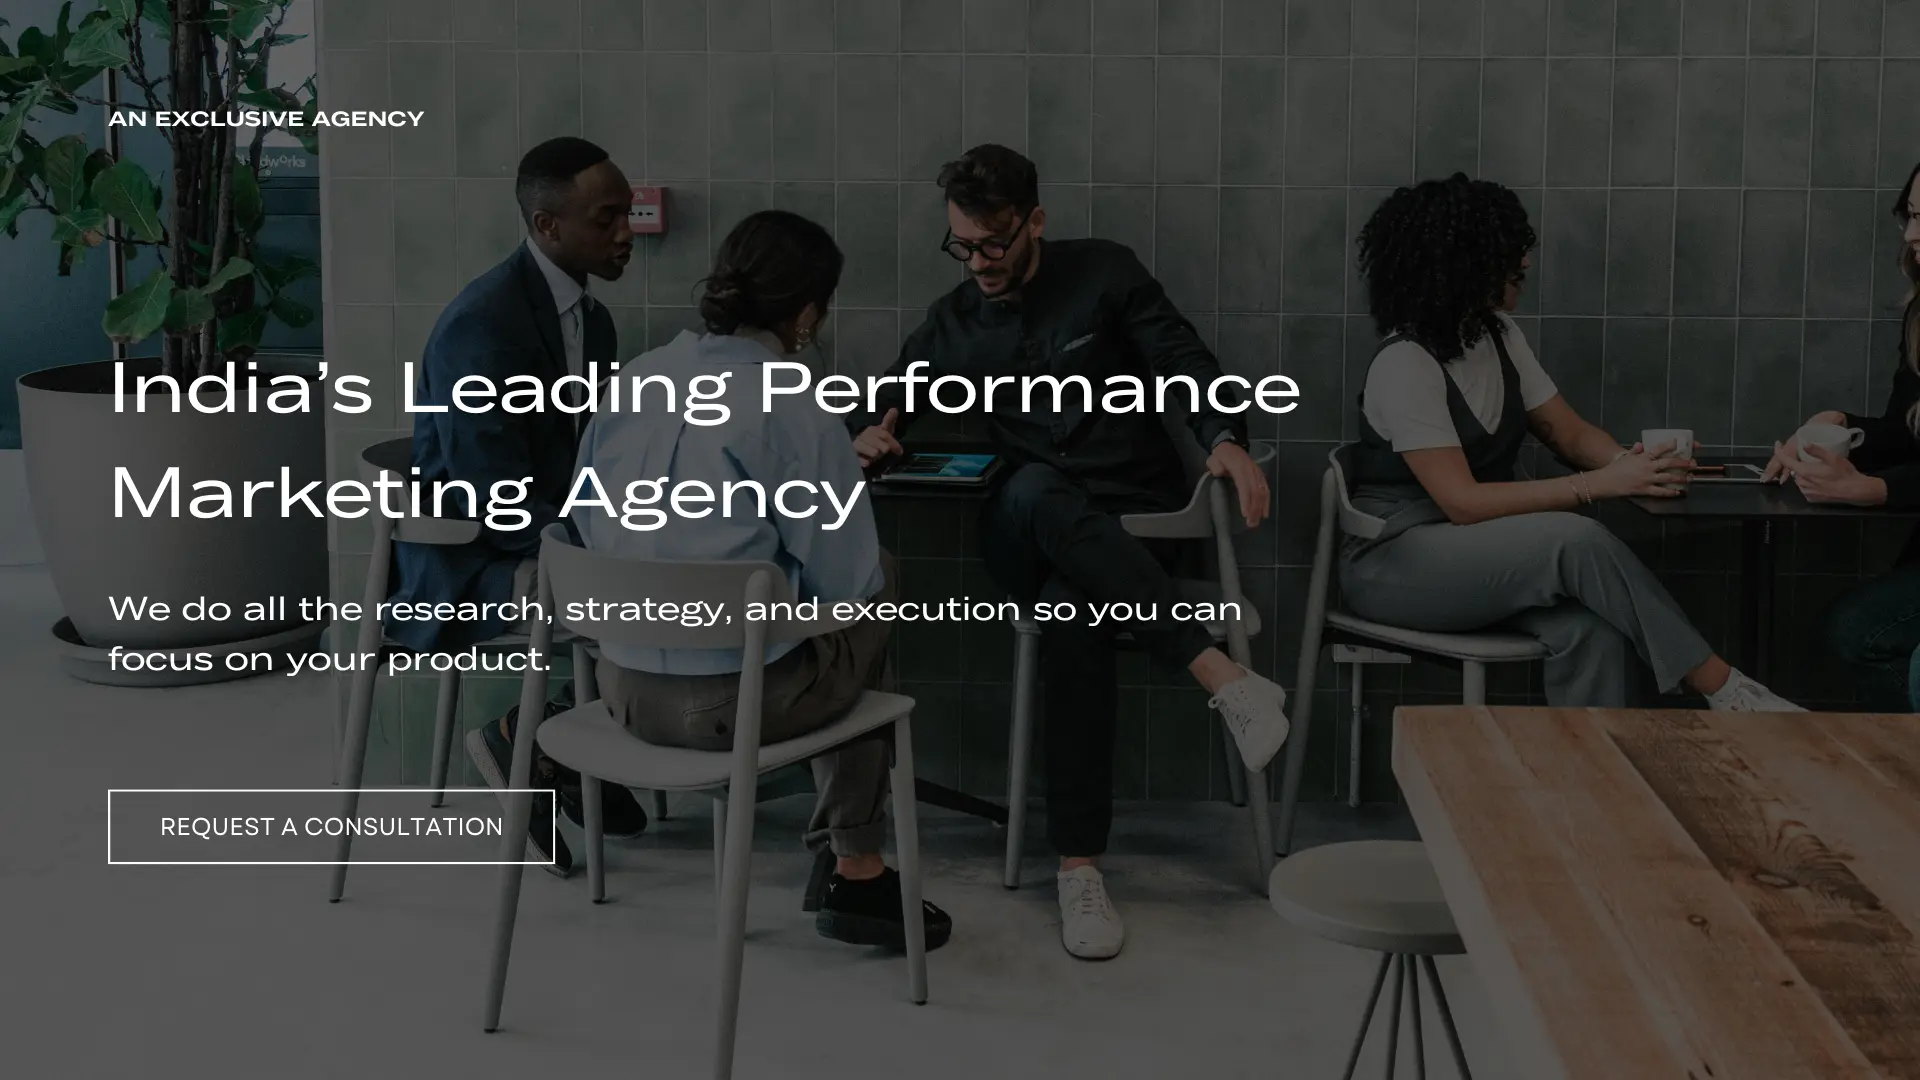 India's leading performance marketing agency